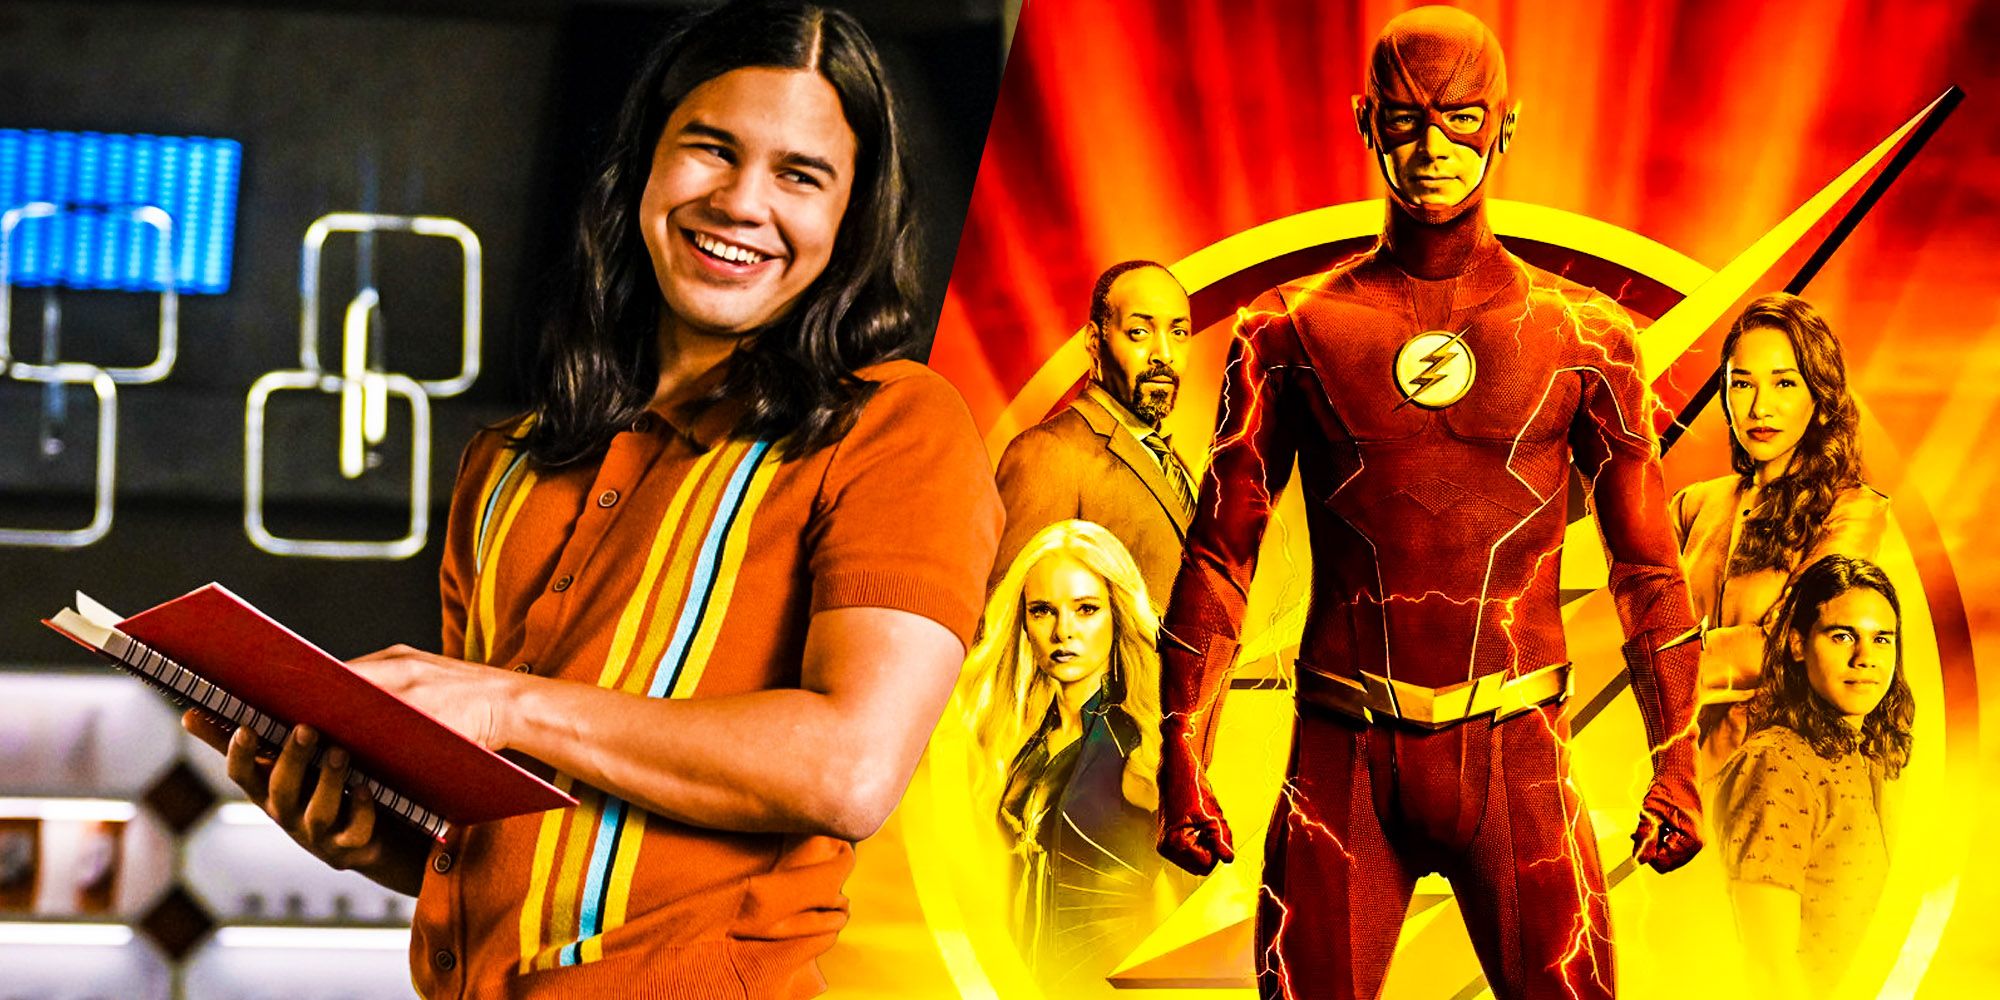 Carlos Valdes as Cisco Ramon in The Flash